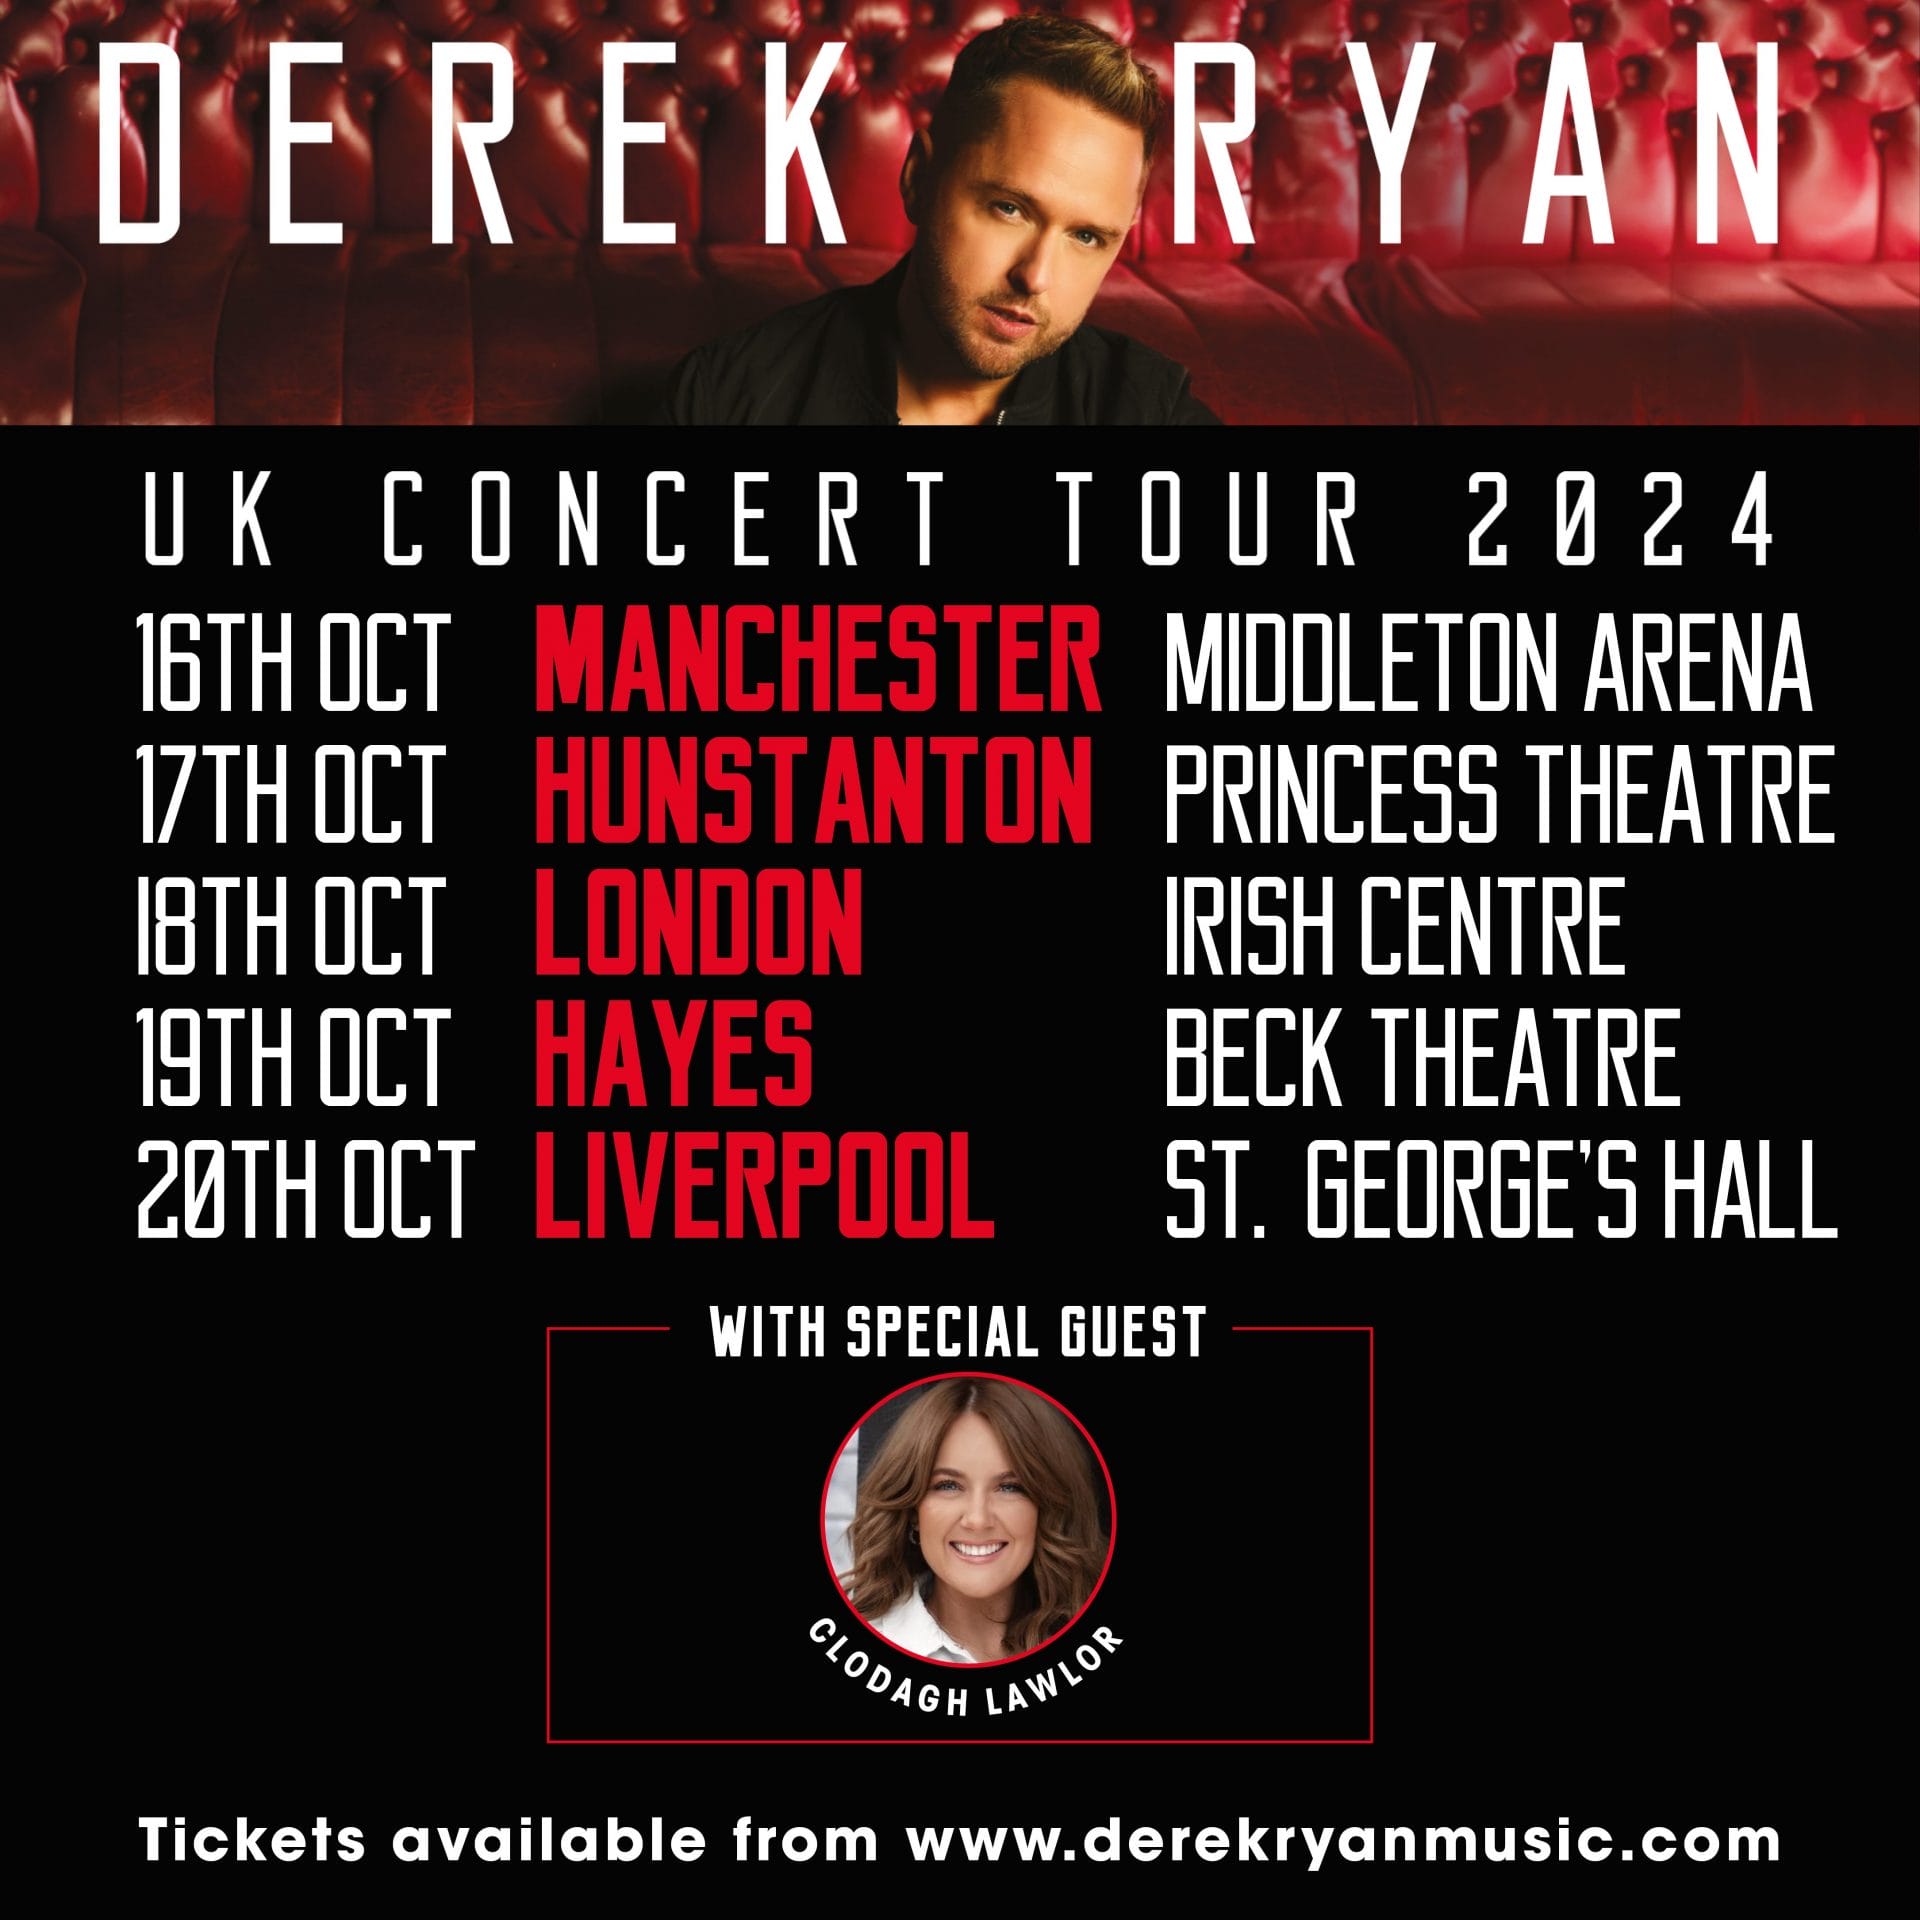 DEREK RYAN UK CONCERT TOUR 2023